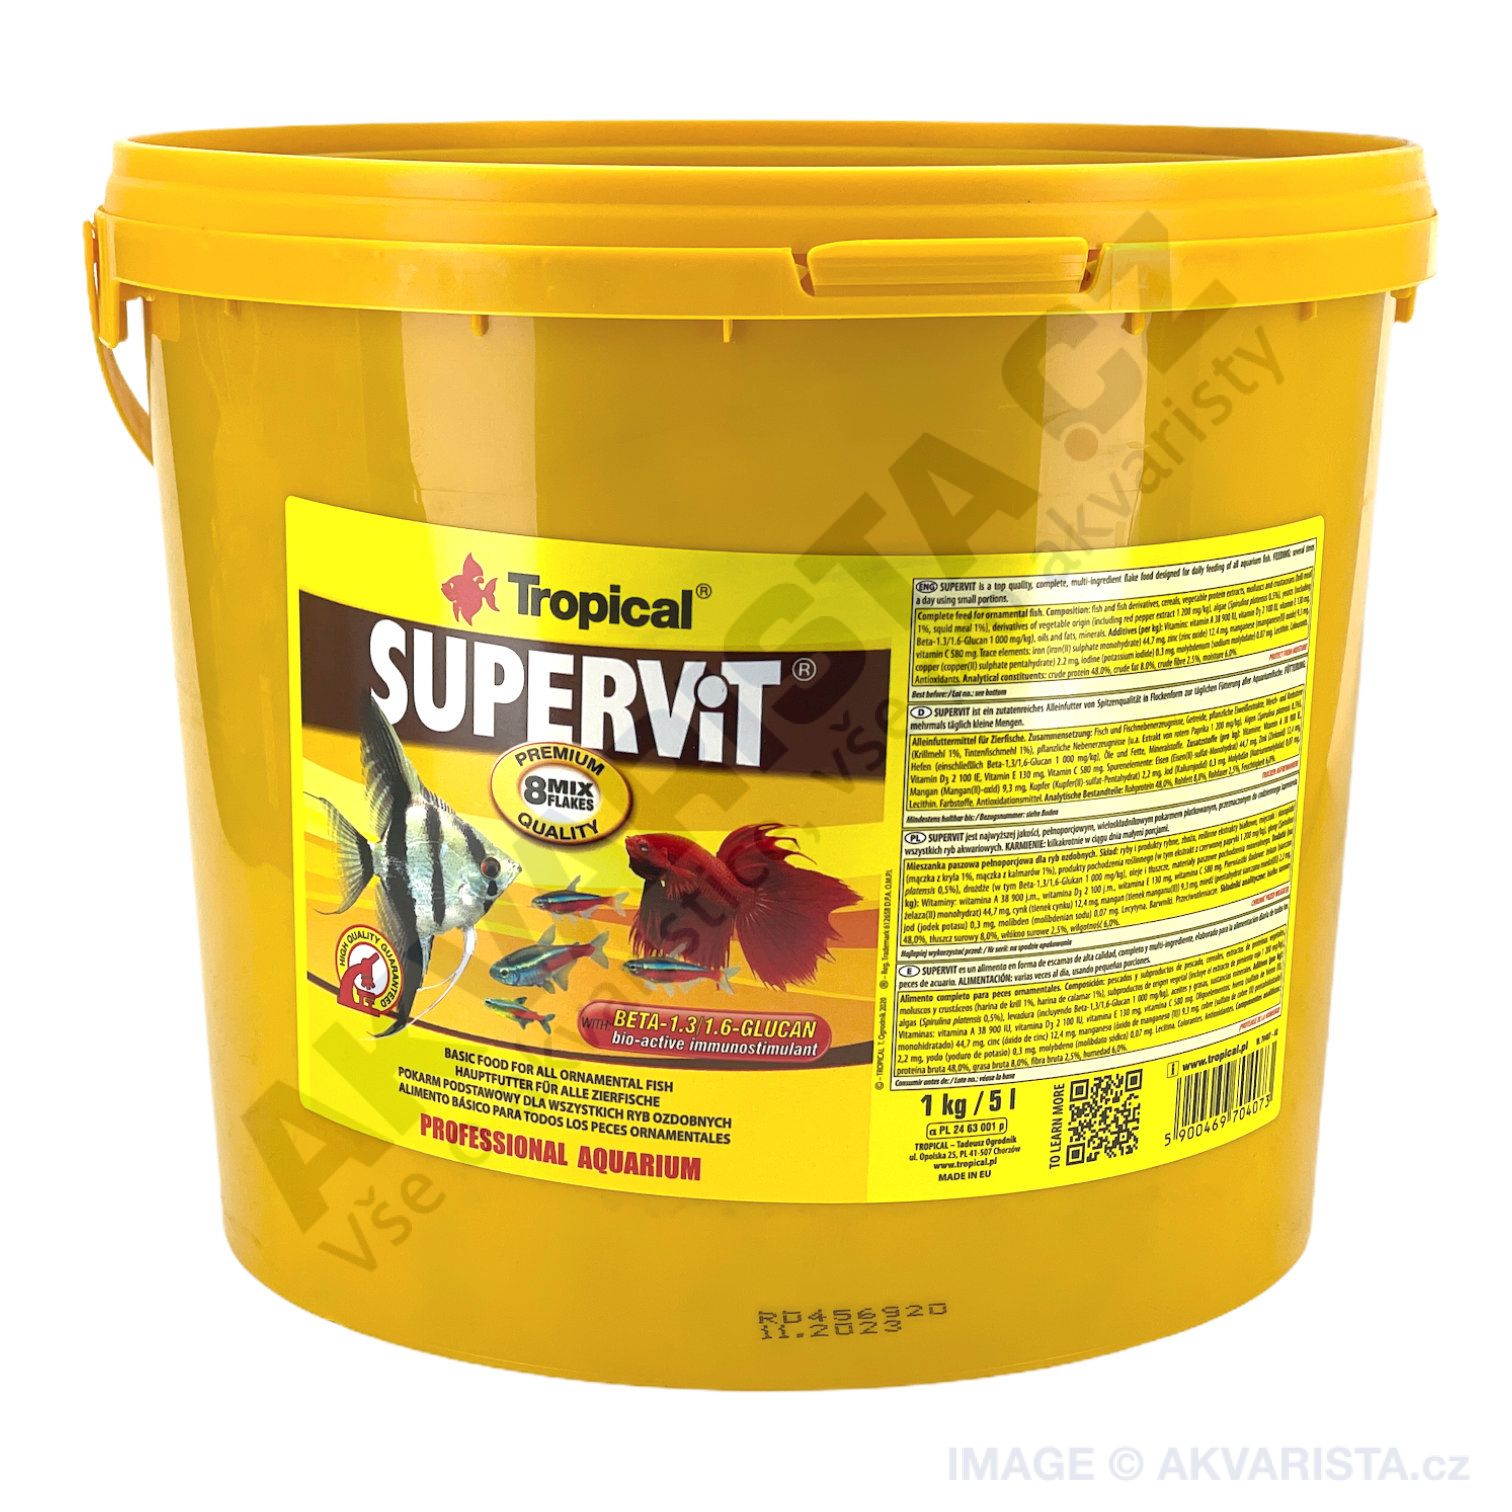 Tropical Supervit 5000 ml